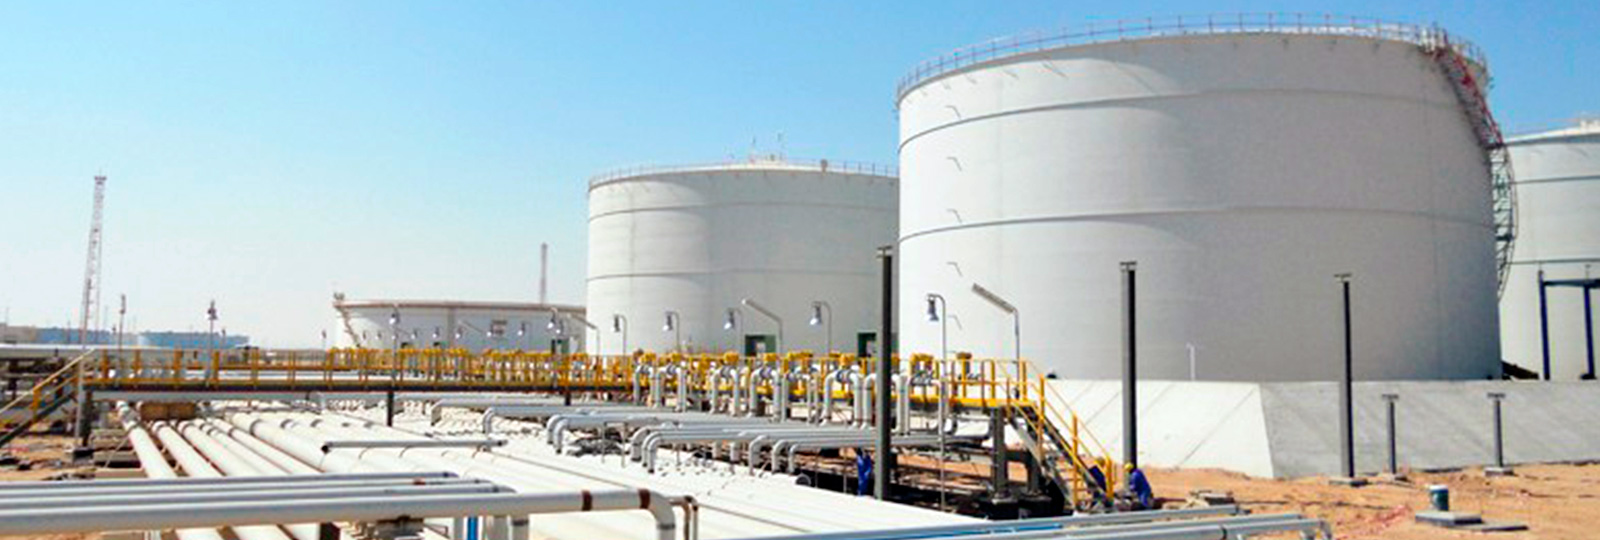 GROUP III BASE OIL PRODUCTION FACILITIES Treviiicos